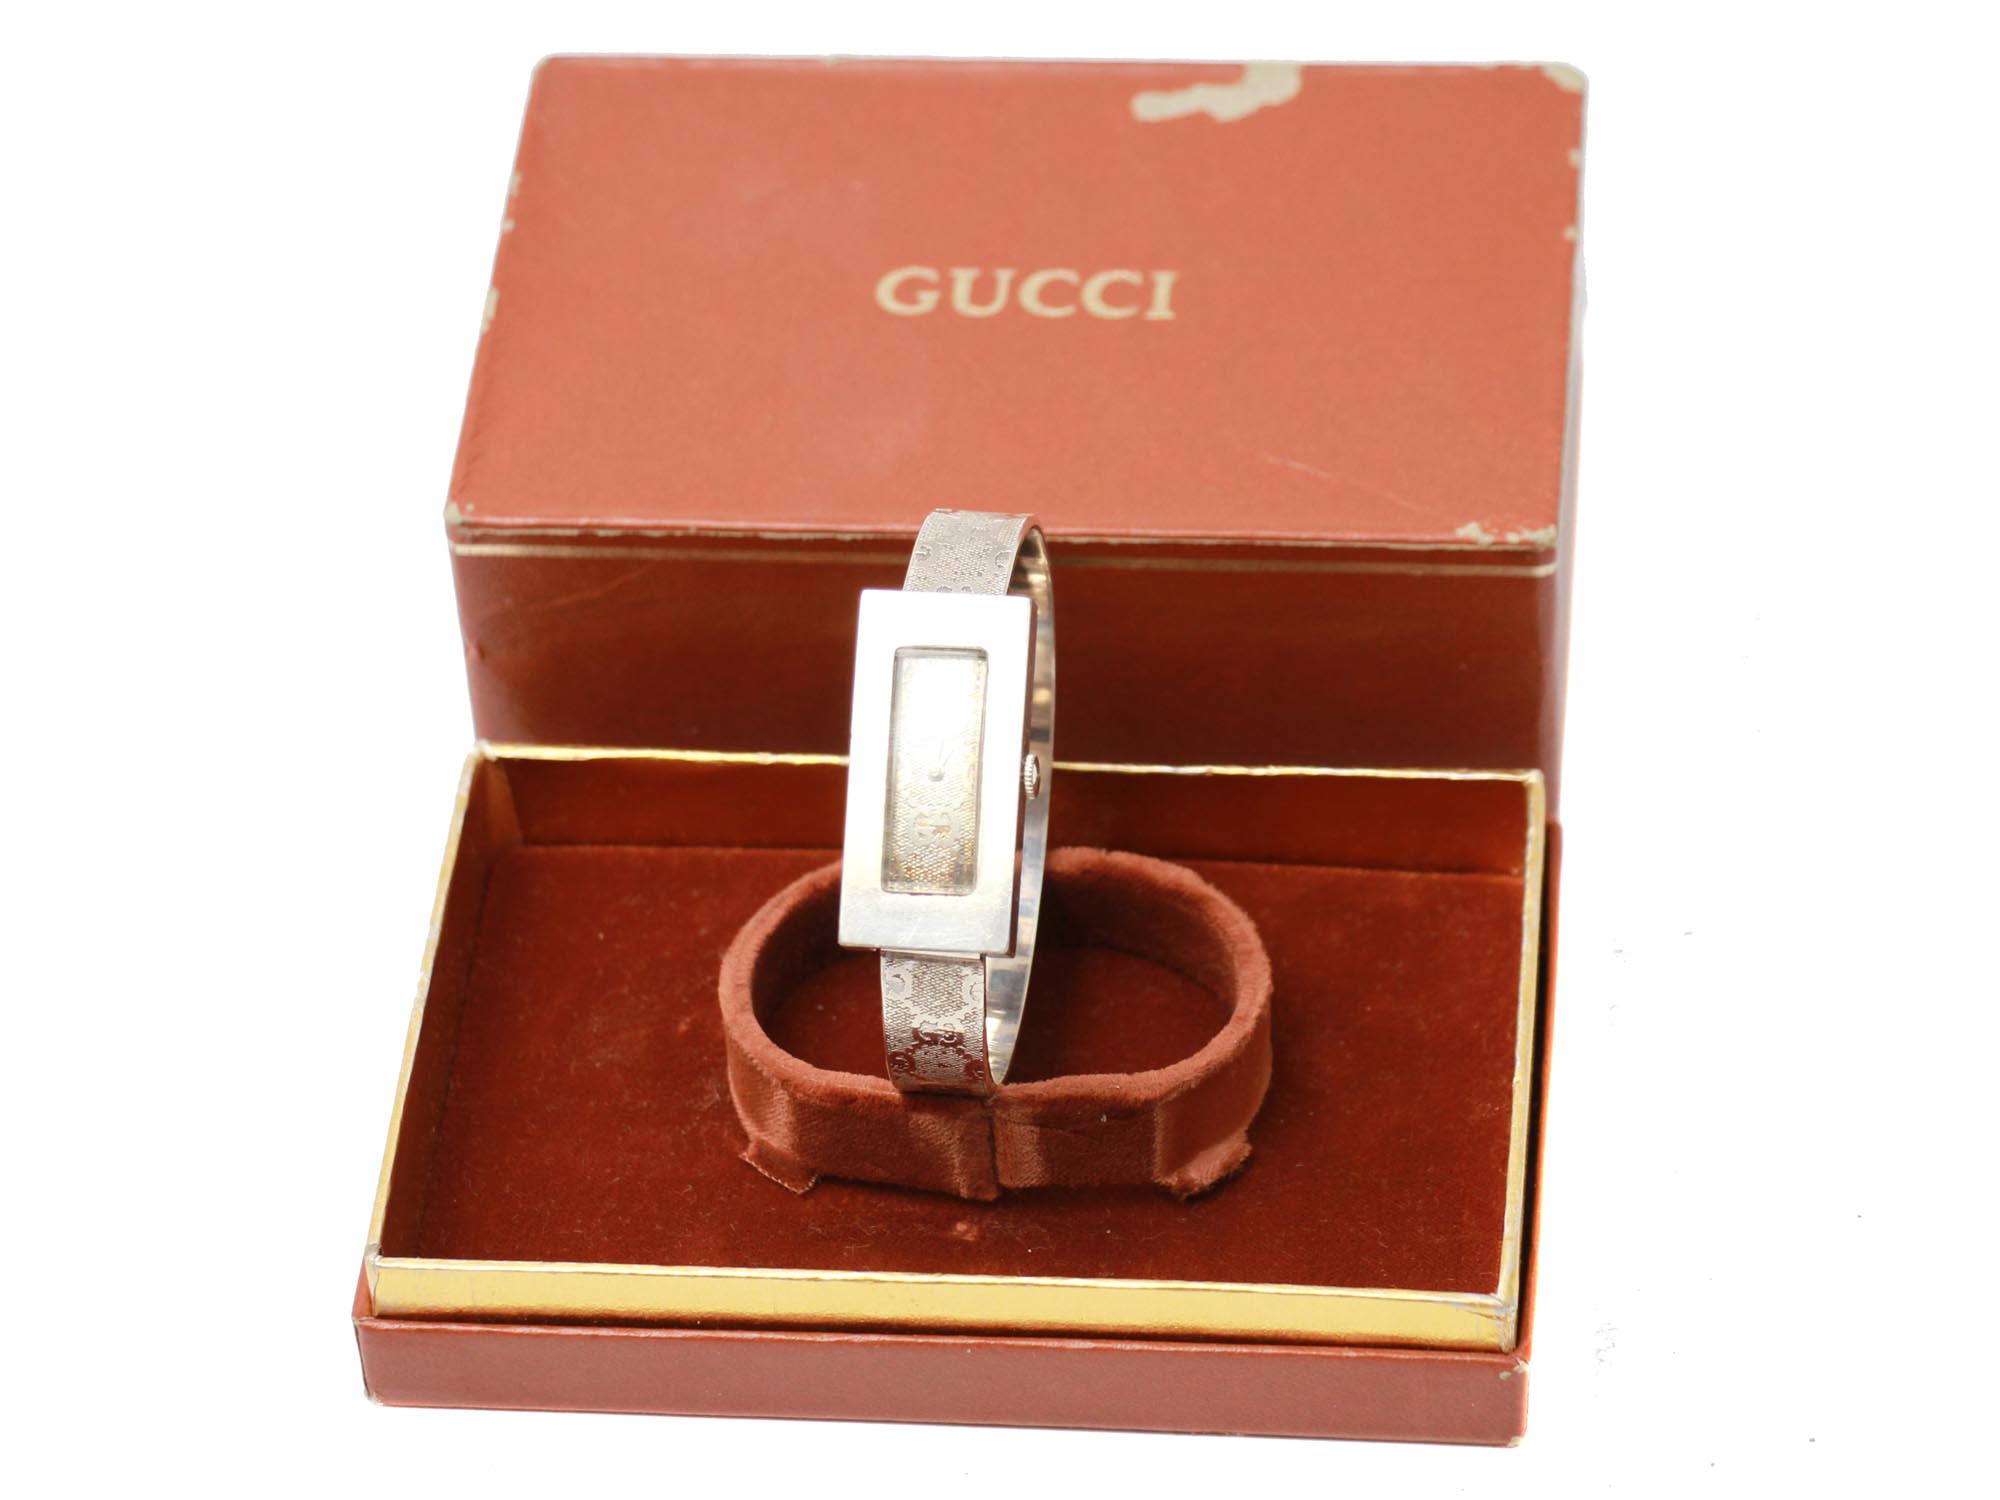 Watch Gucci Silver in Steel - 40510501